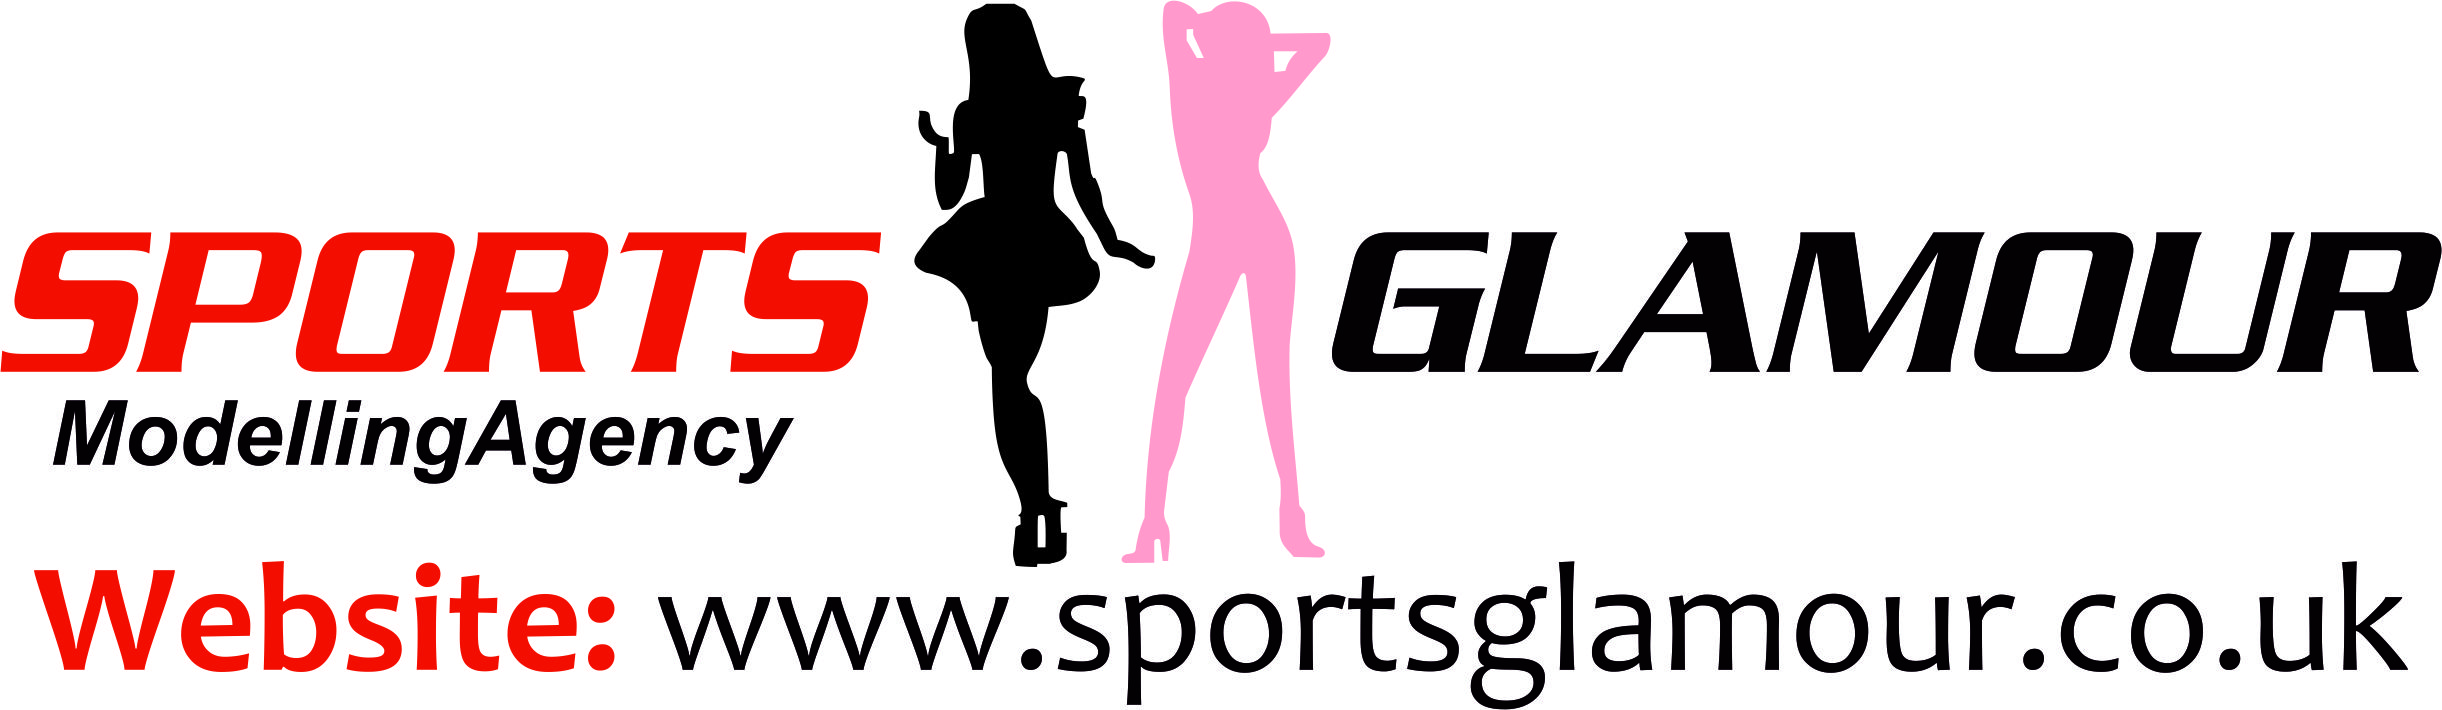 Logo of Sports Glamour Model Agency featuring the text Sports Glamour Model Agency and the website URL www.sportsglamour.co.uk